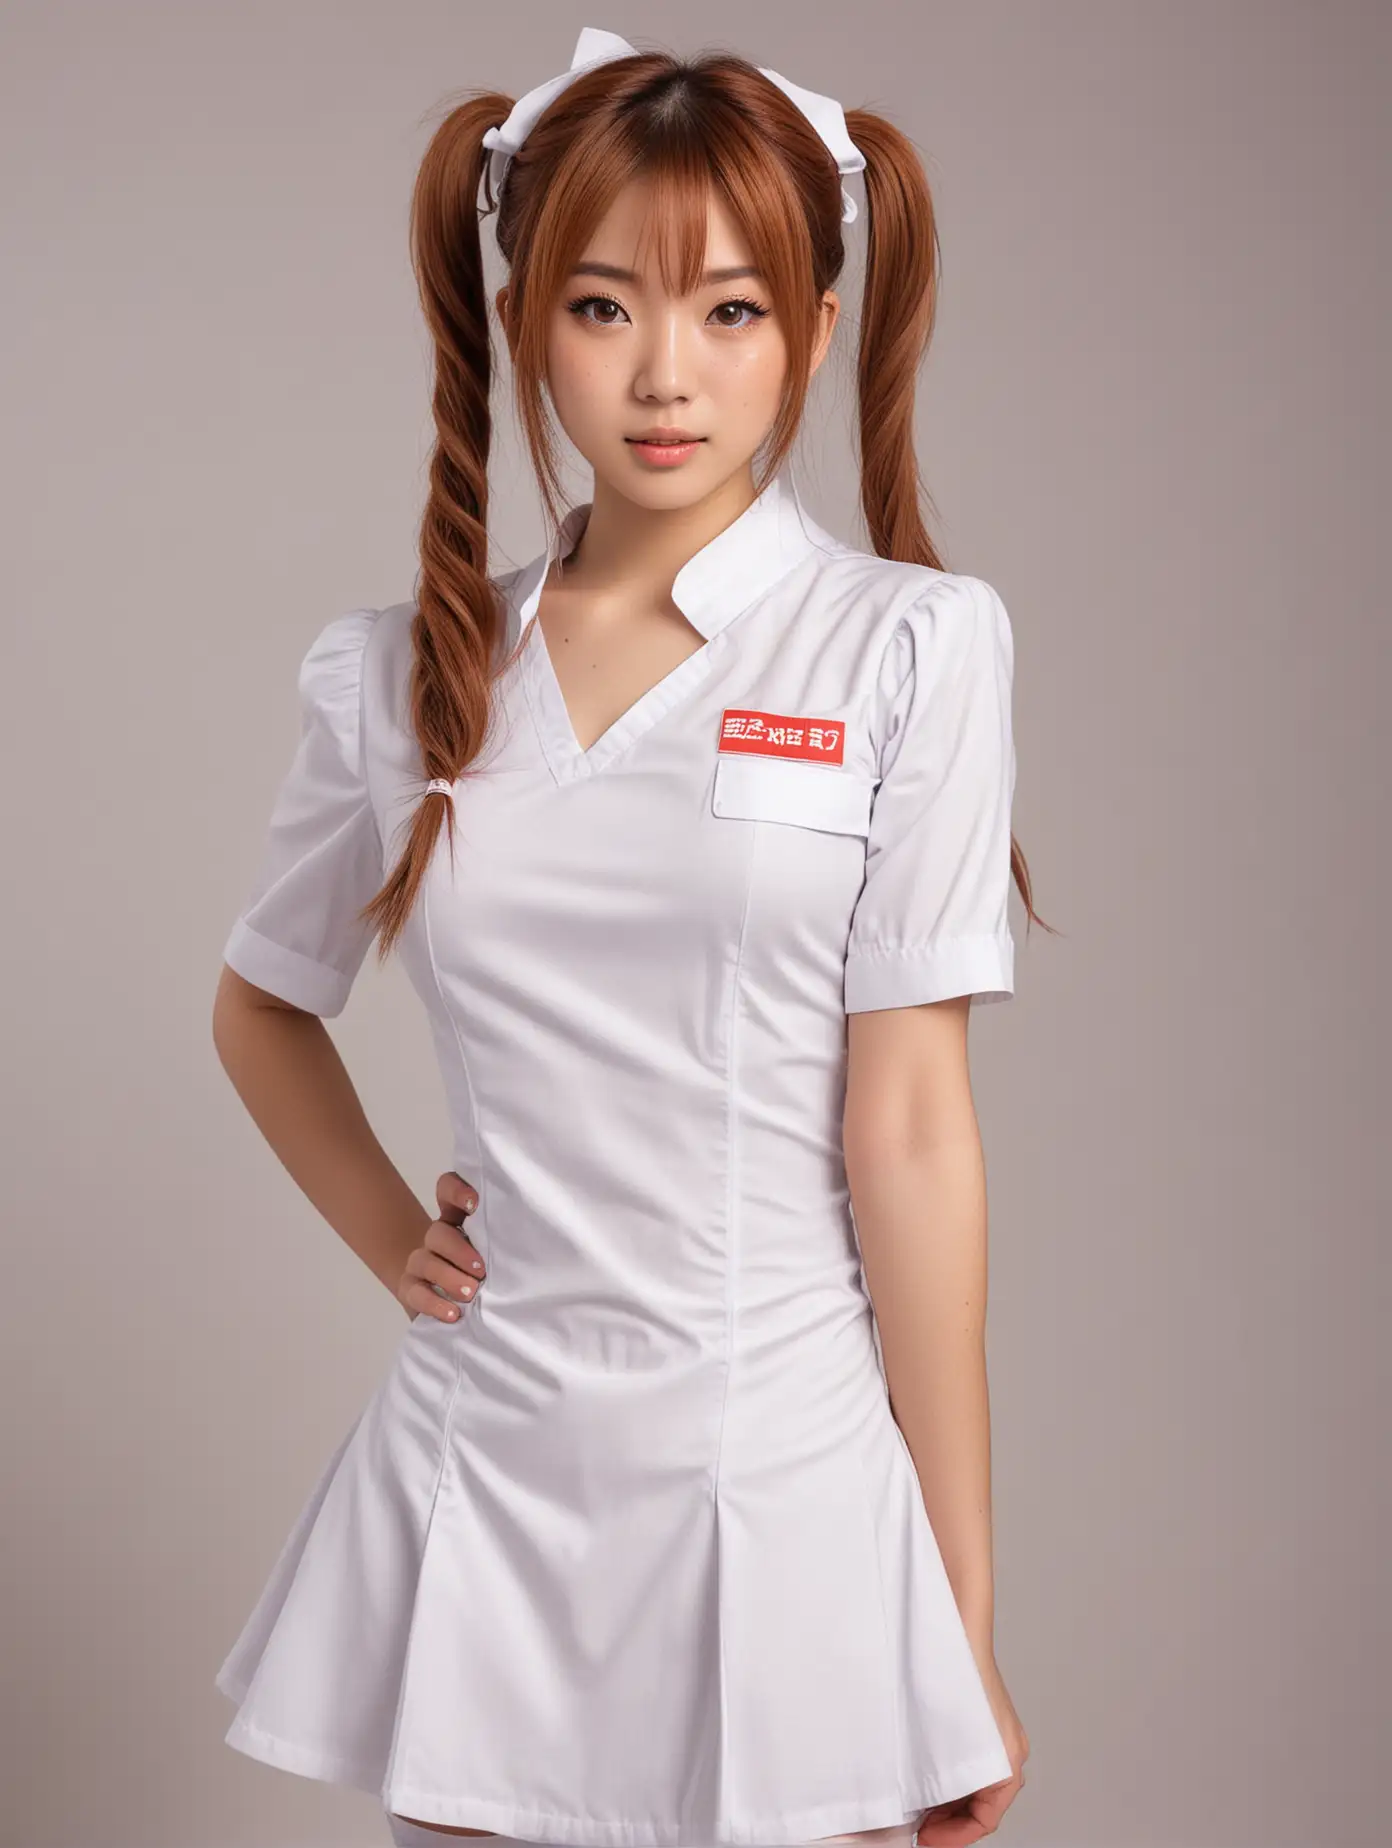 Cute Japanese Girl with Medium Length Caramel Hair in Sexy Nurse Costume